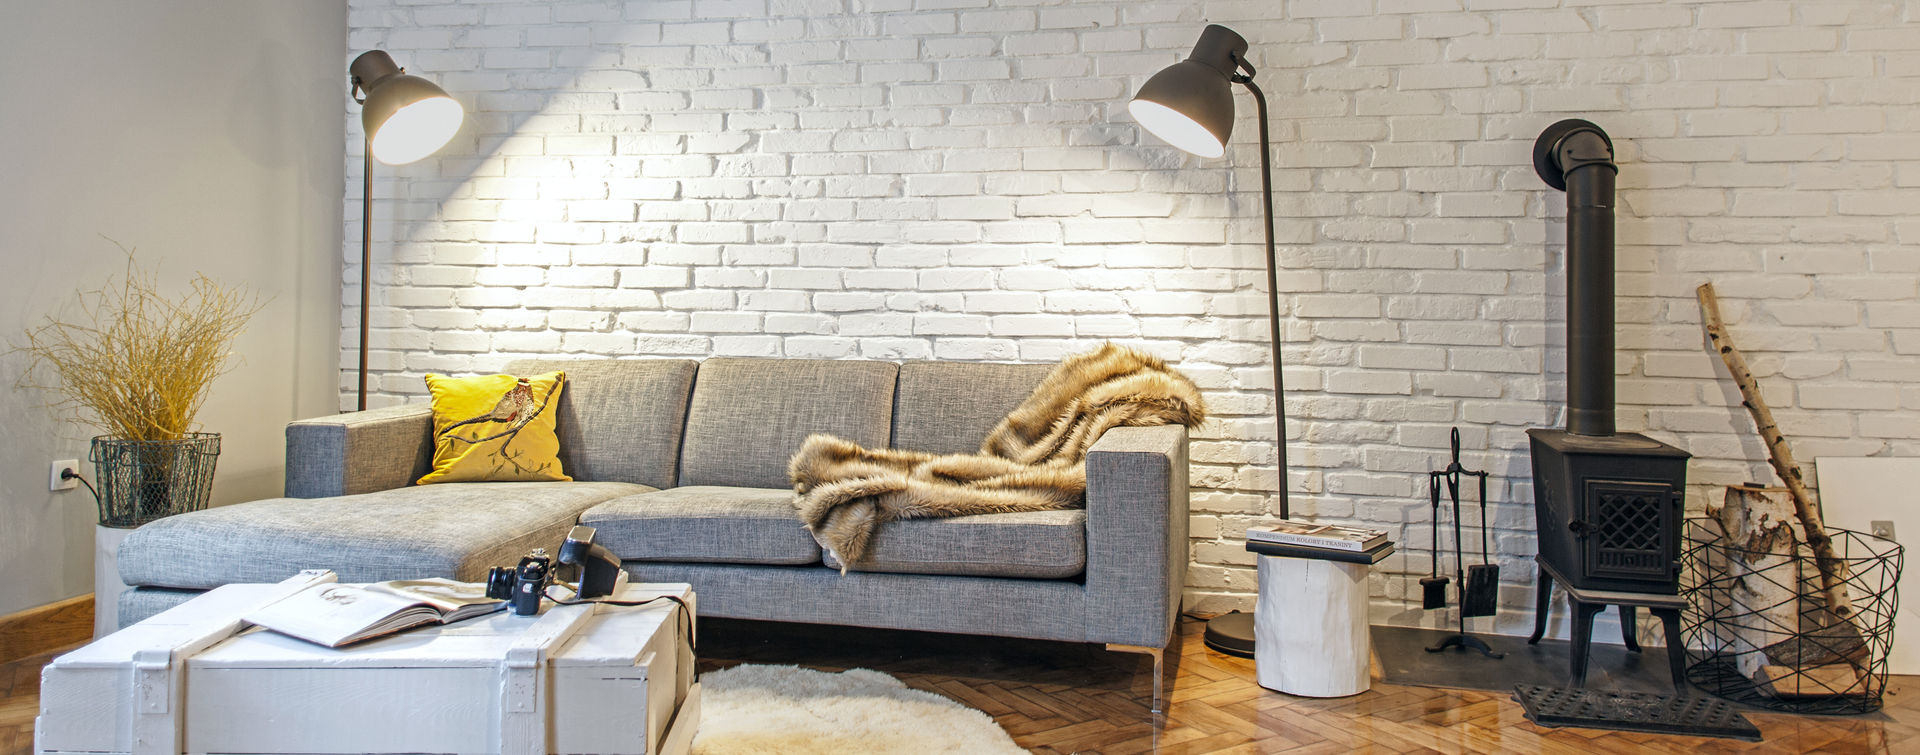 Apartament w Sopocie, DoMilimetra DoMilimetra Salas de estar modernas